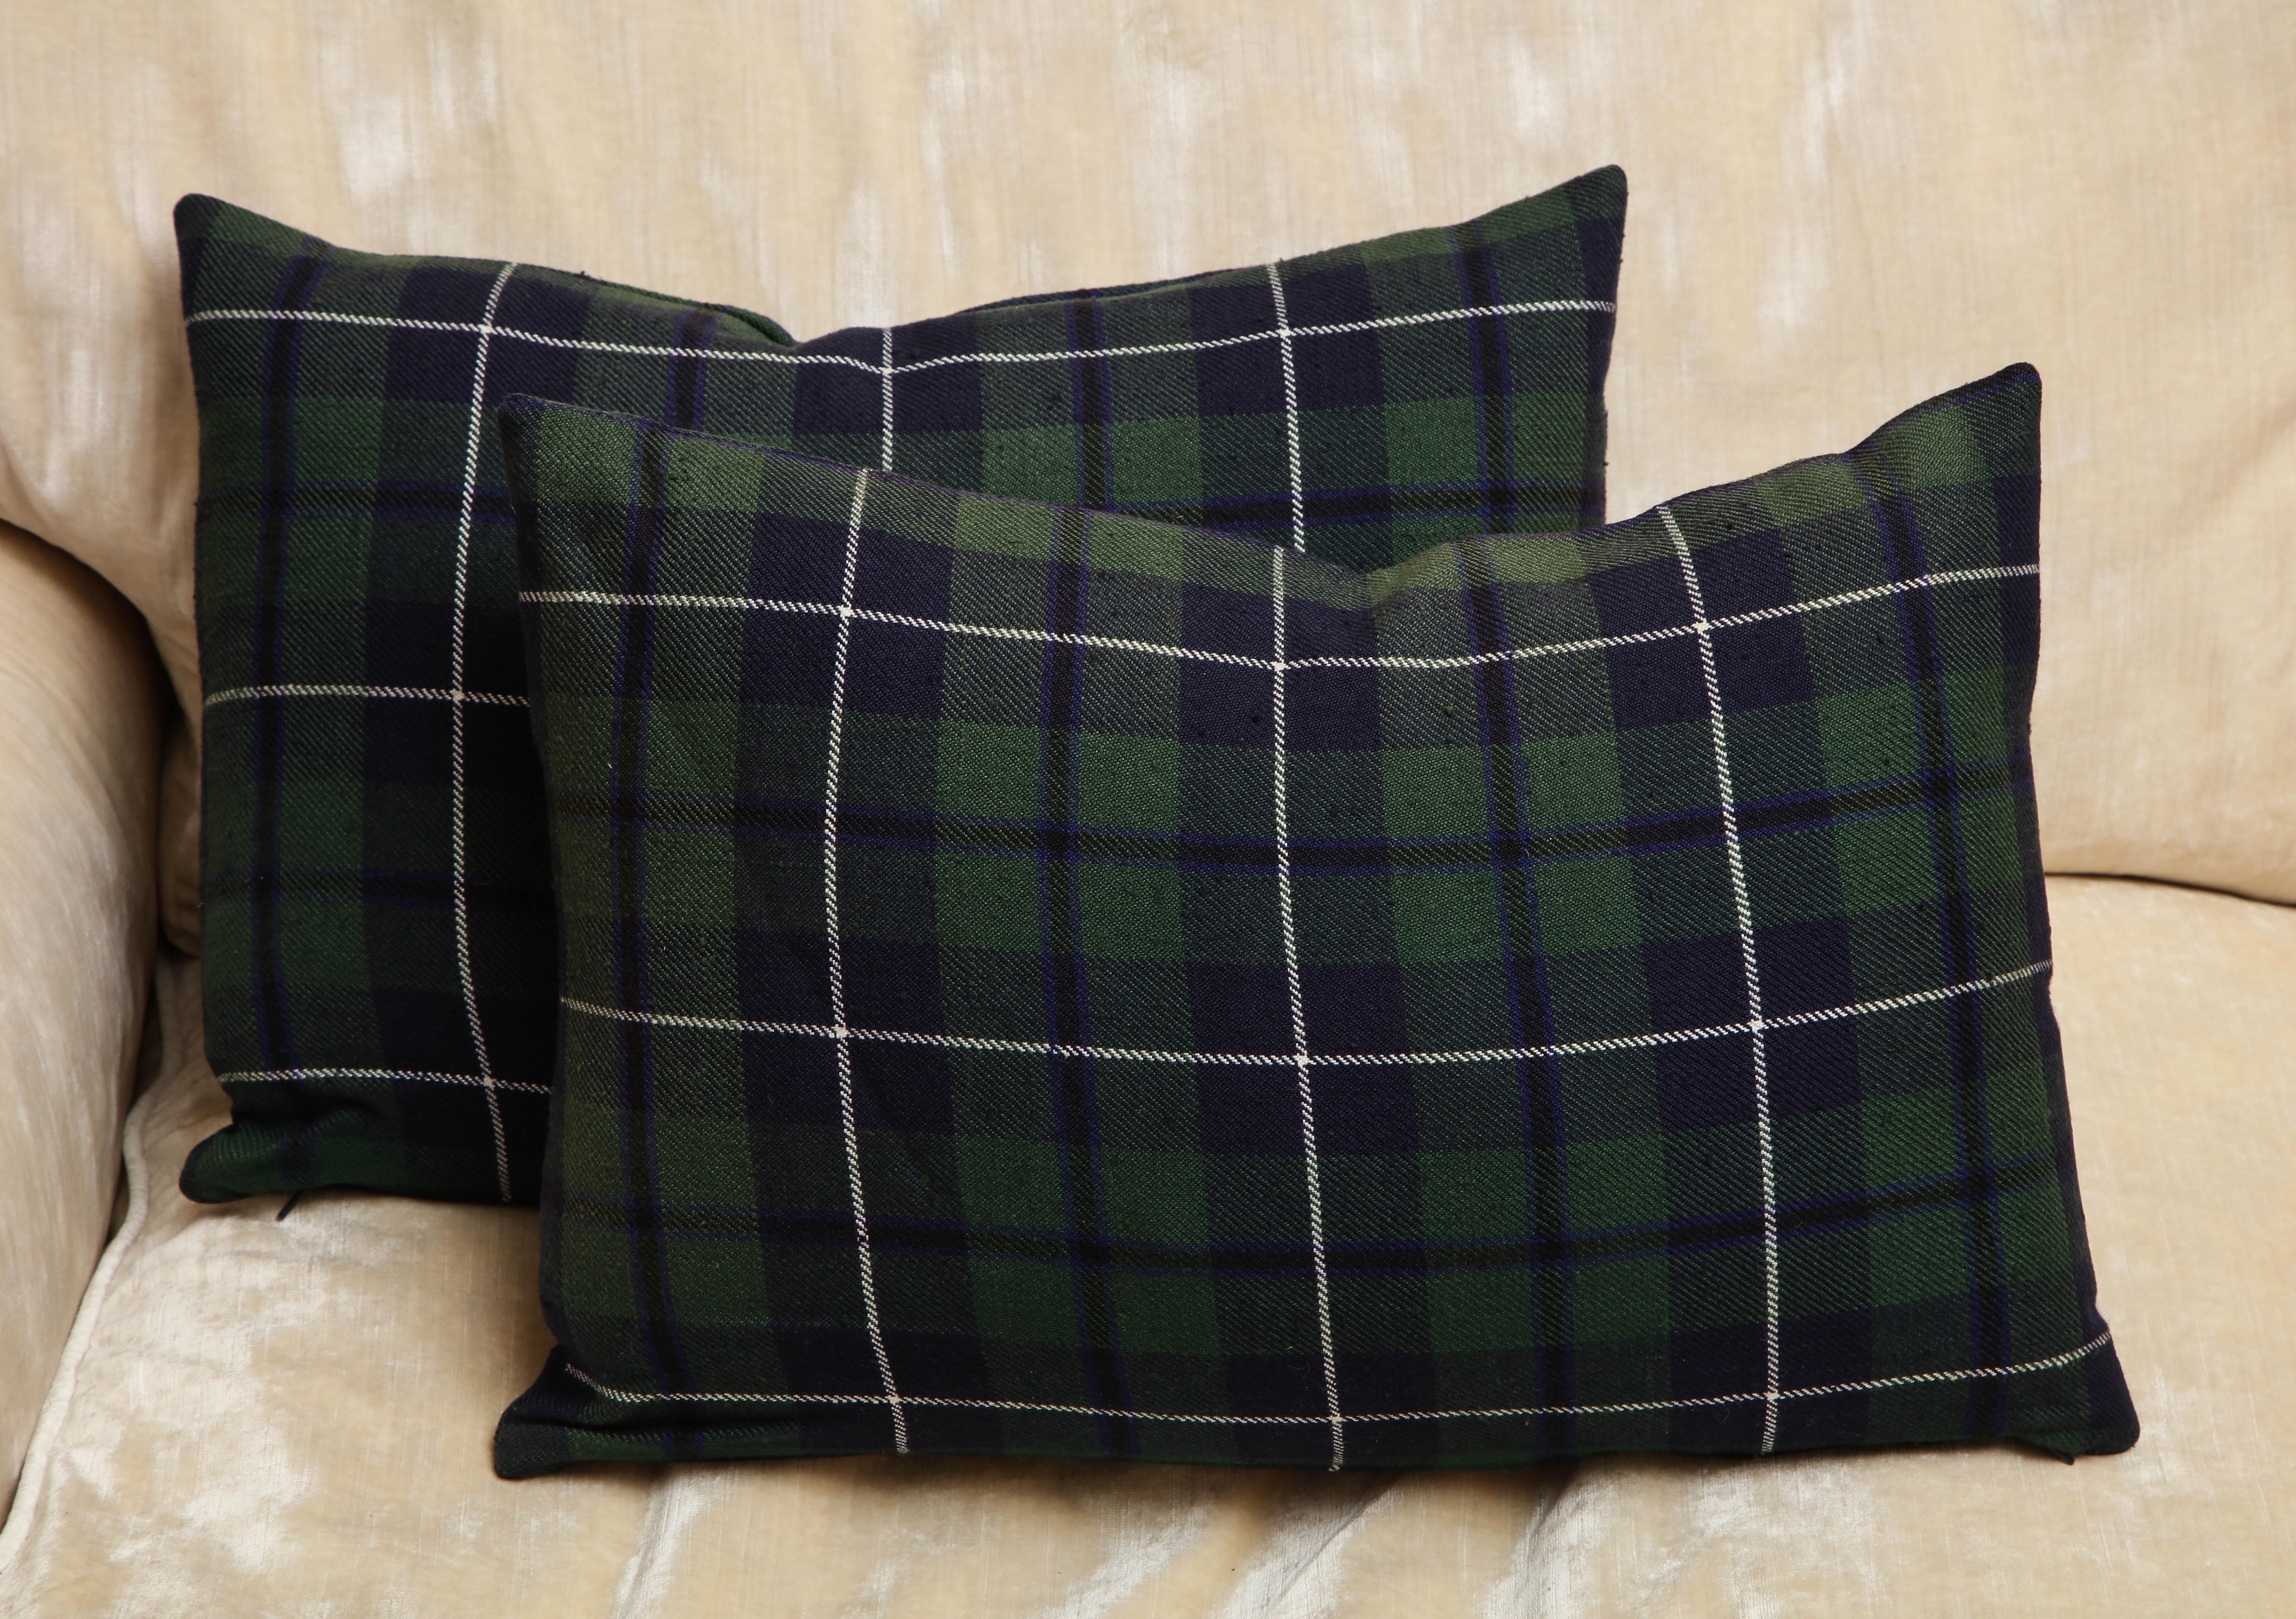 Scottish Tartan Pillows Associated to Clan Urquhart from Scotland For Sale